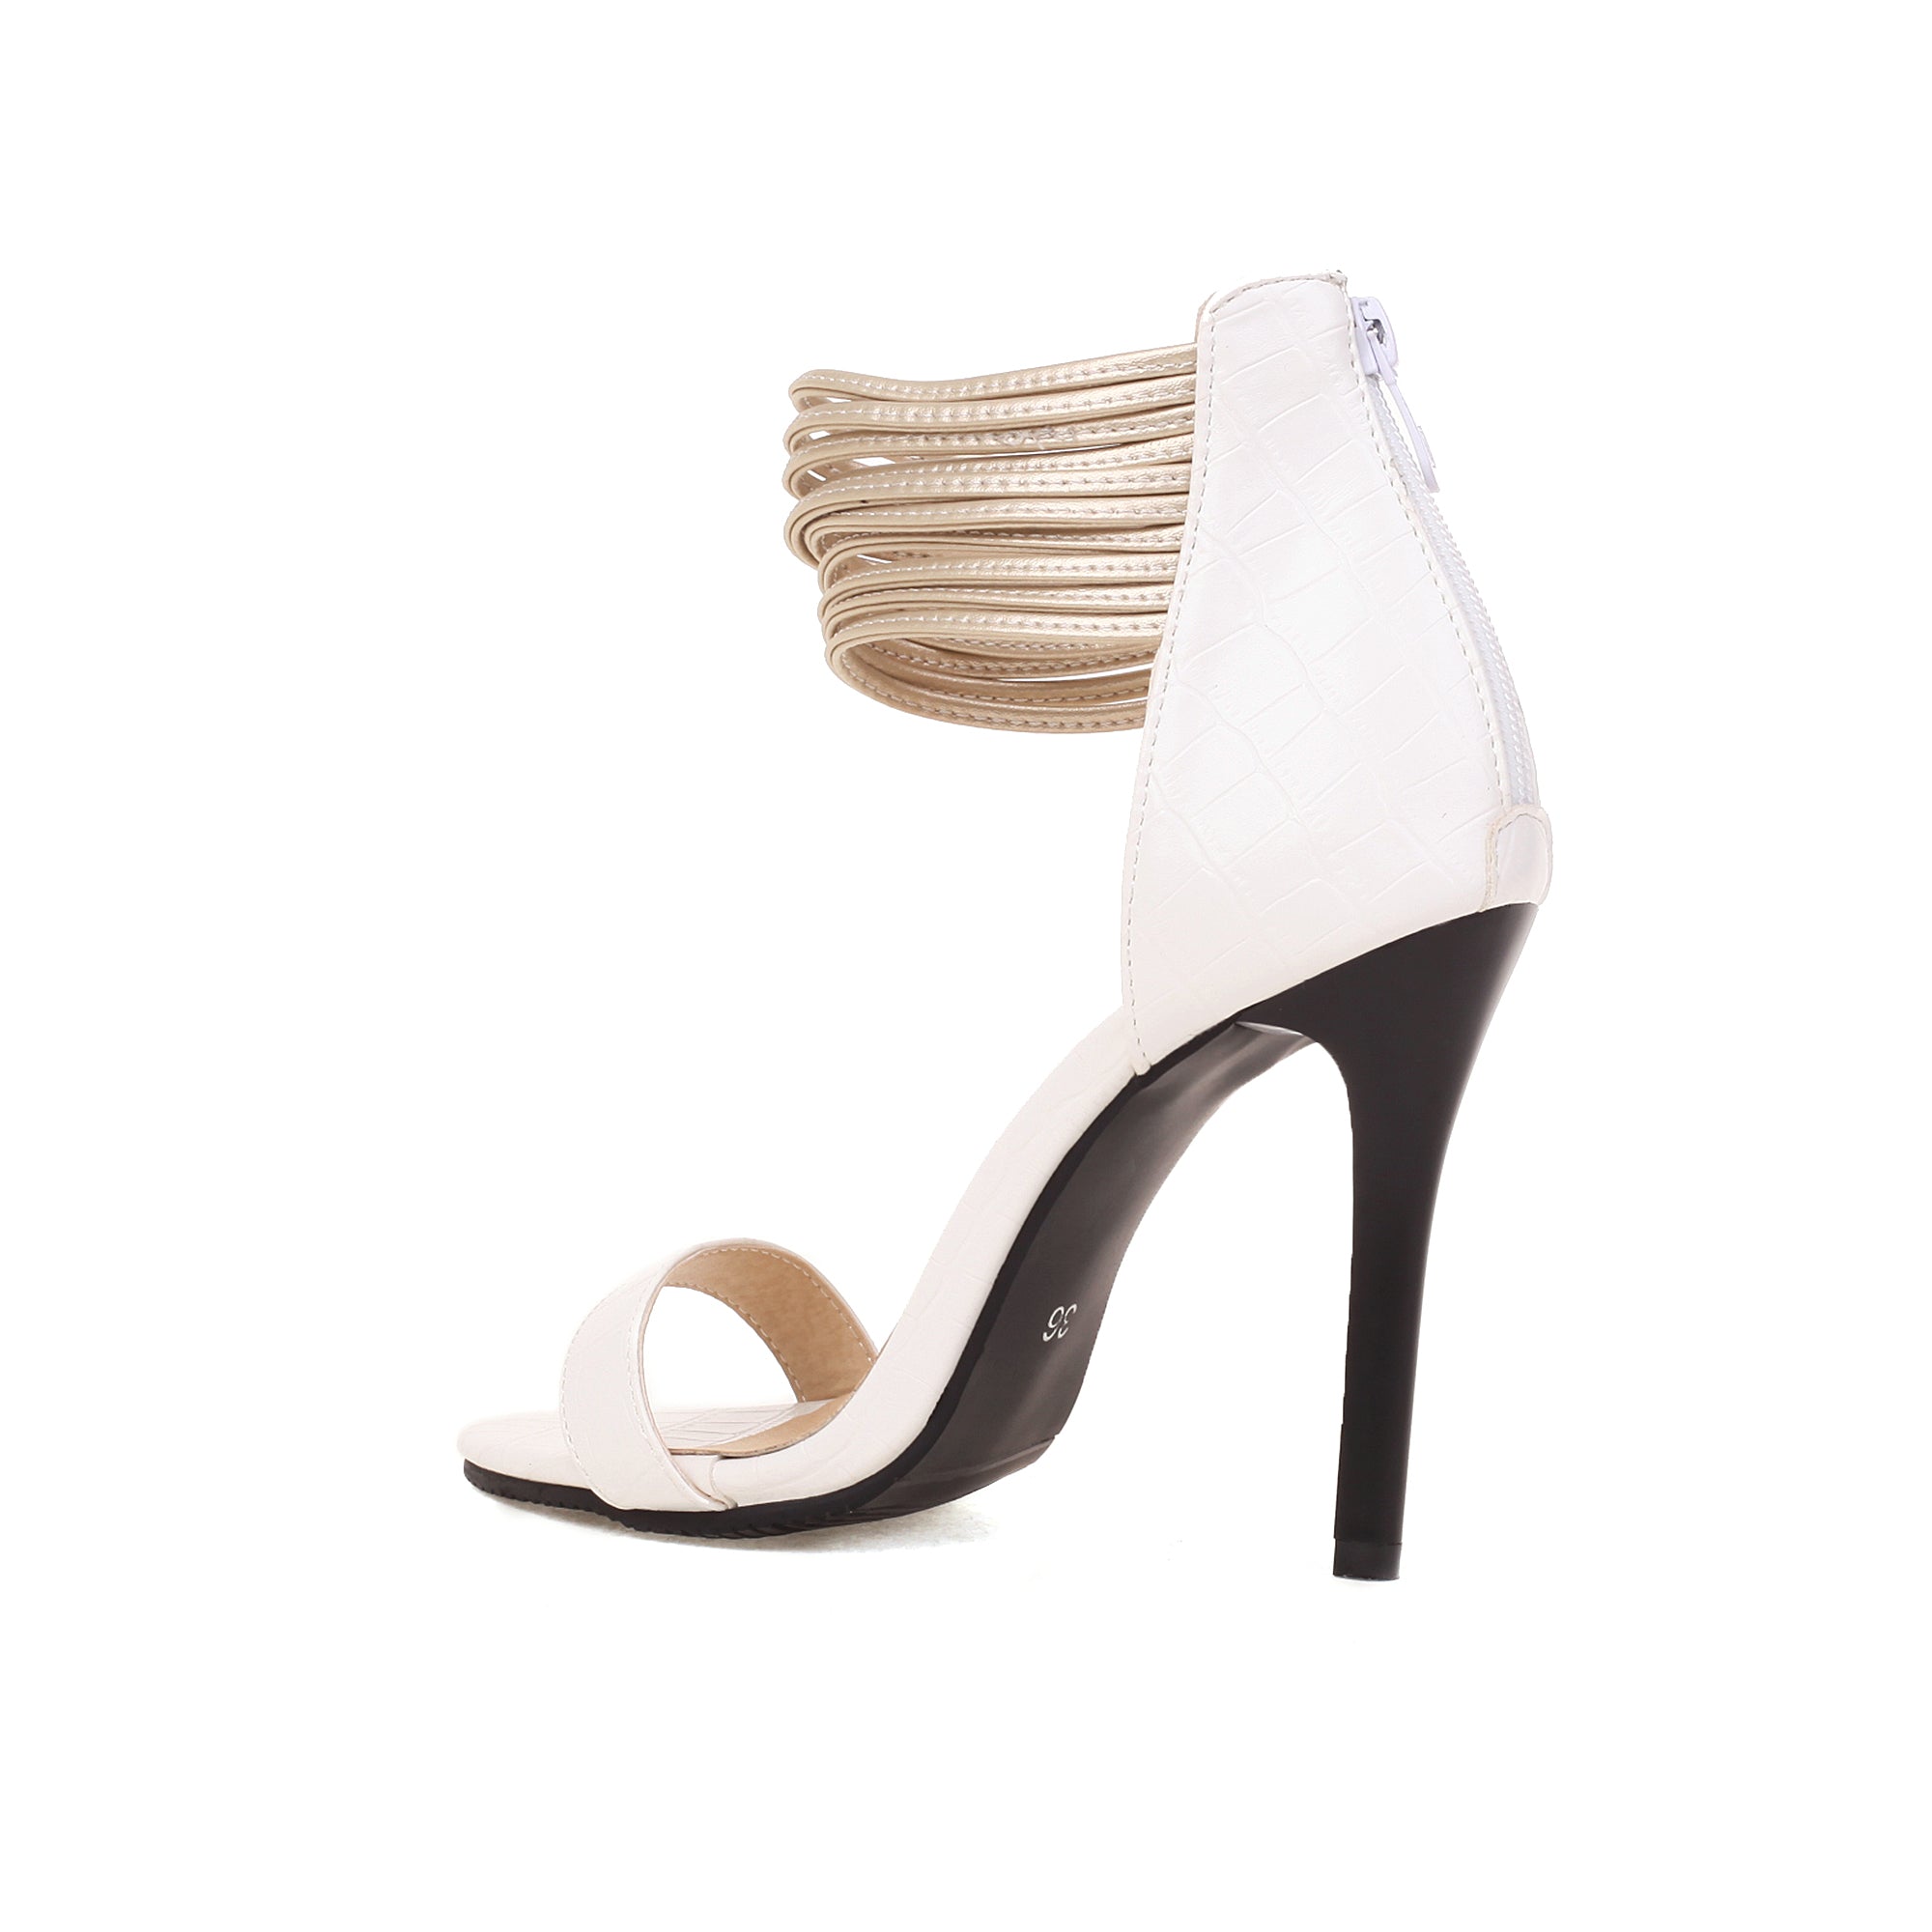 Bigsizeheels Stiletto Heel Pointed Toe Leather Lace Up Sandals - White best oversized womens heels are from bigsizeheels®